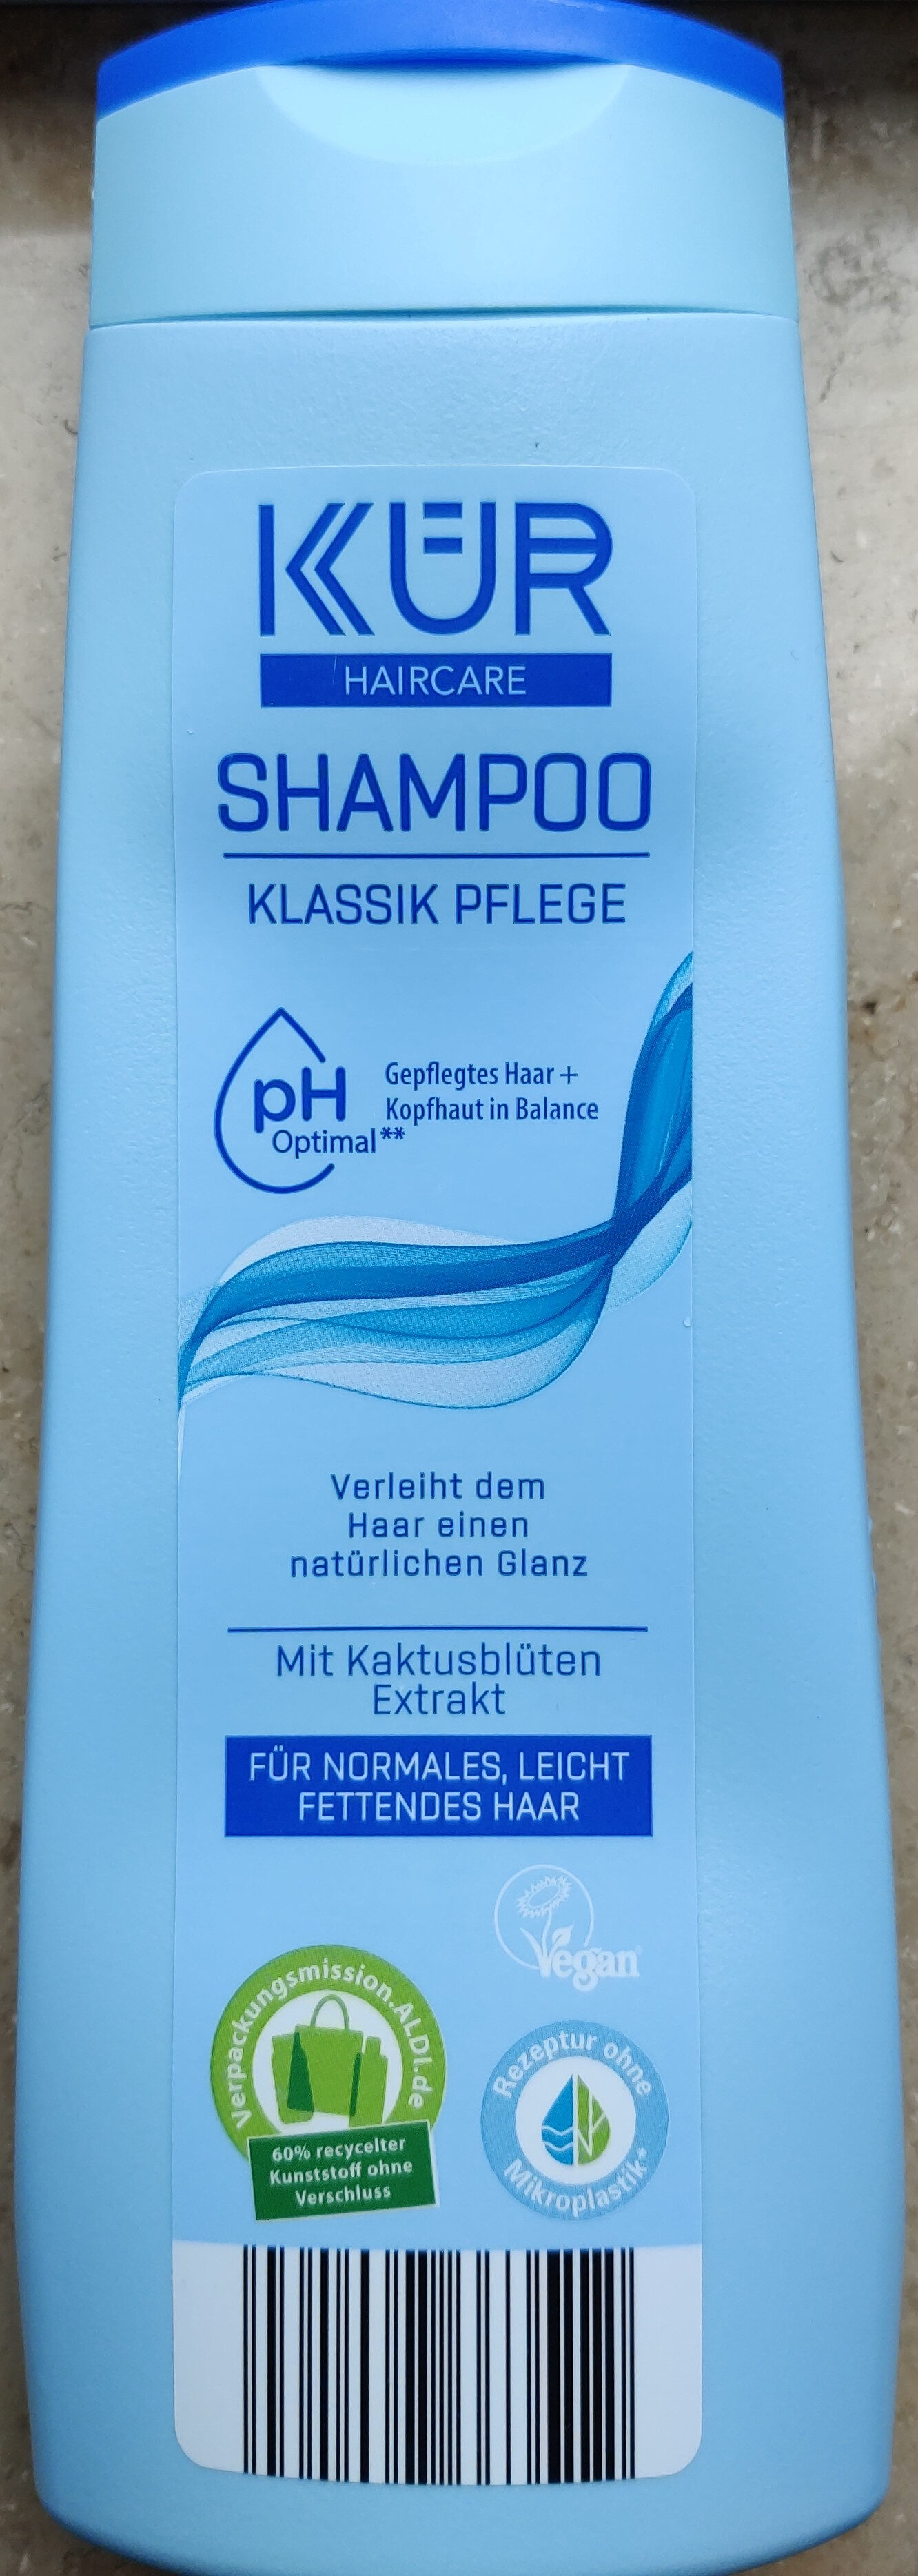 Shampoo Klassik Pflege - Product - en